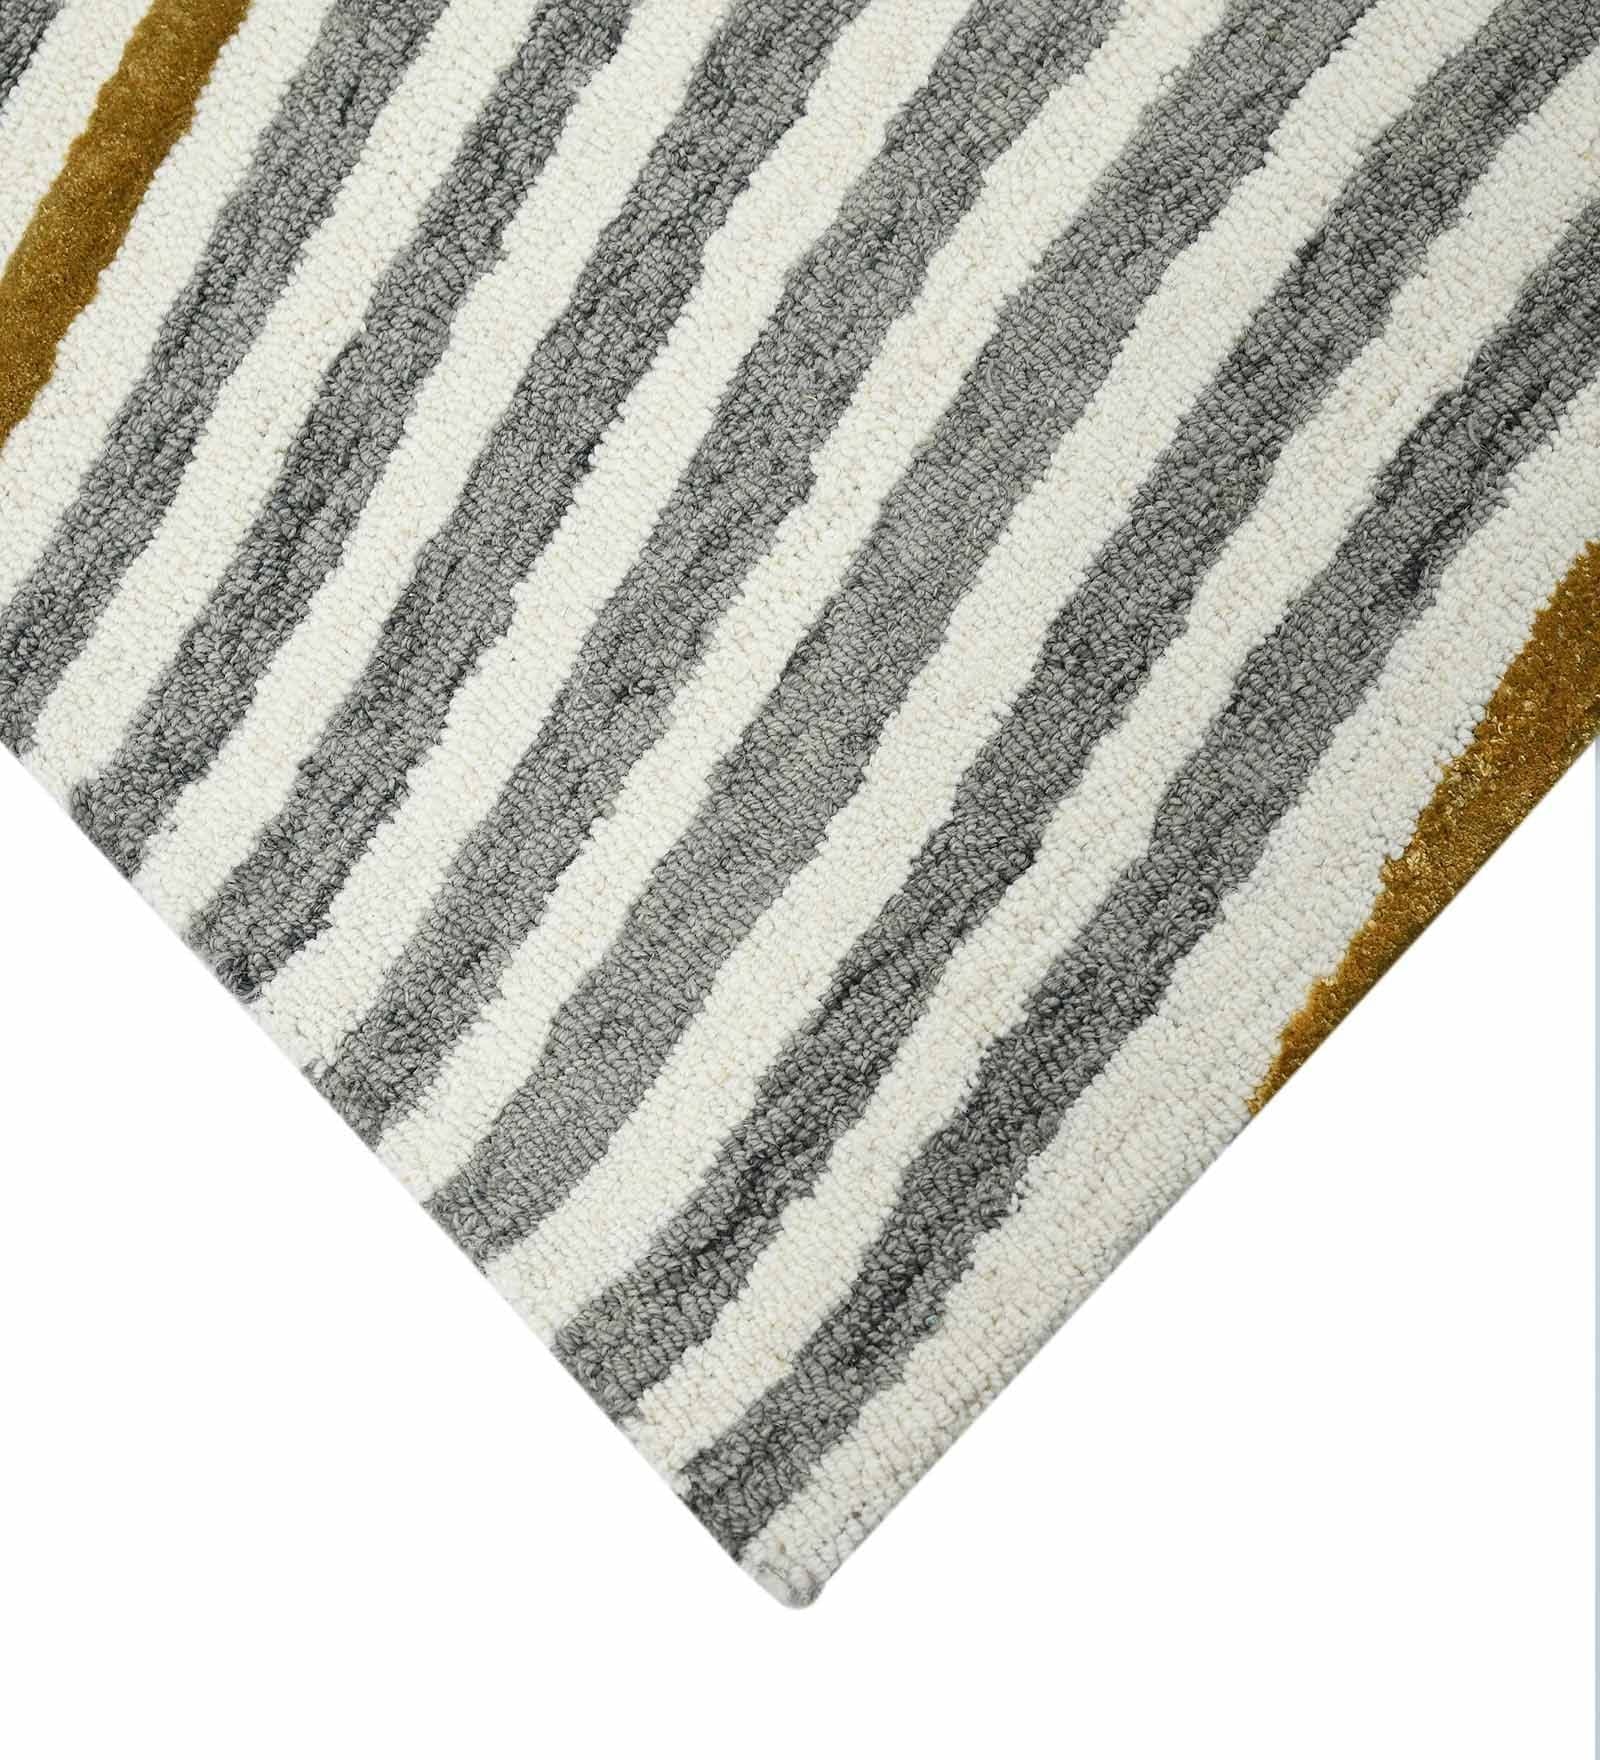 WHITE IVORY Wool & Viscose Canyan 4x6 Feet  Hand-Tufted Carpet - Rug